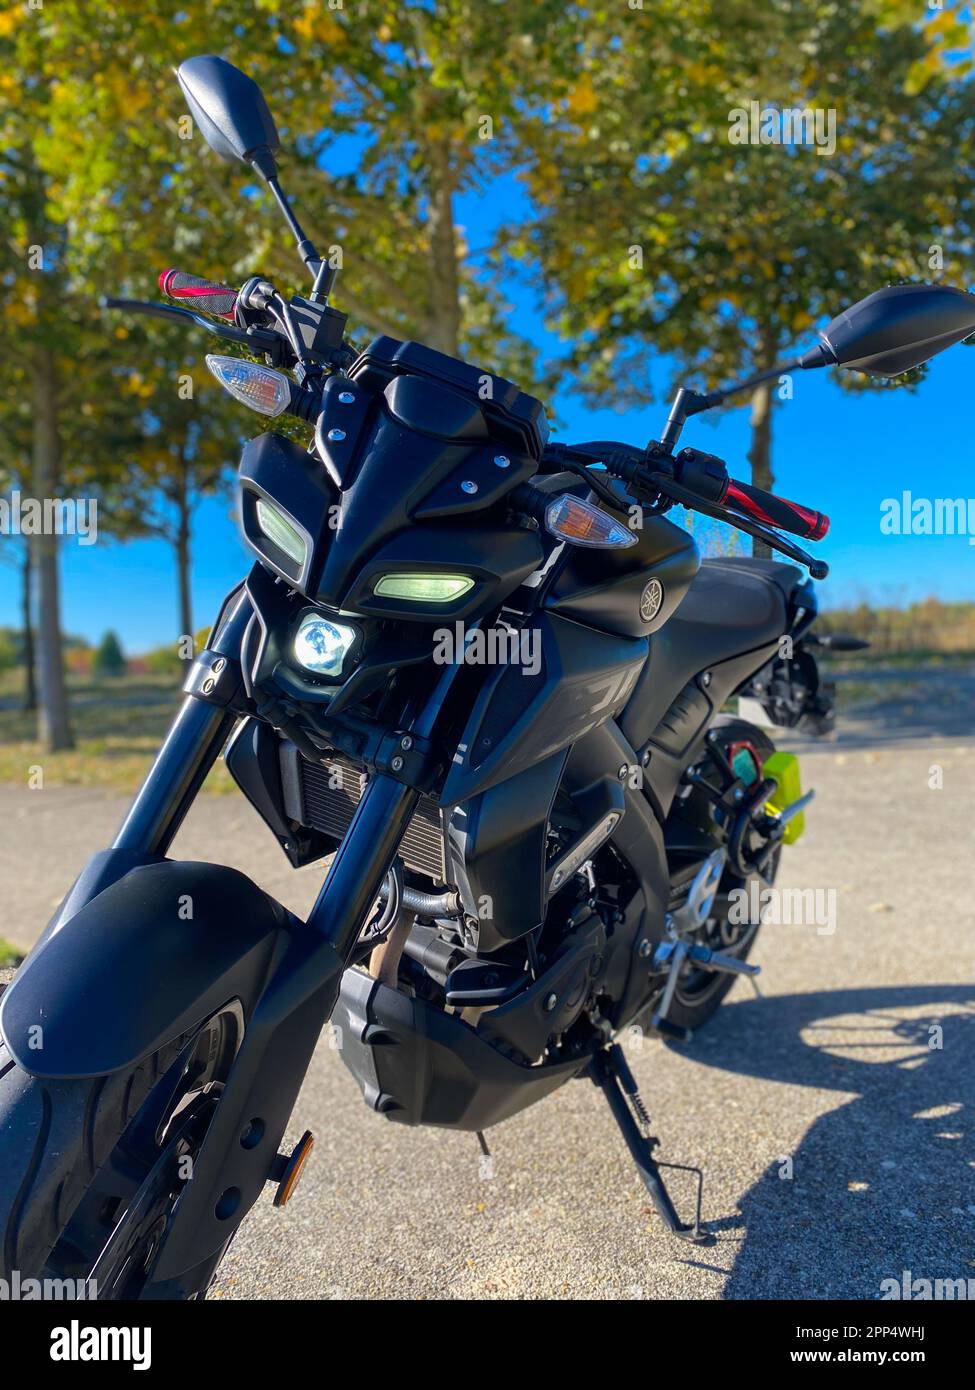 Yamaha 125 hi-res stock photography and images - Alamy